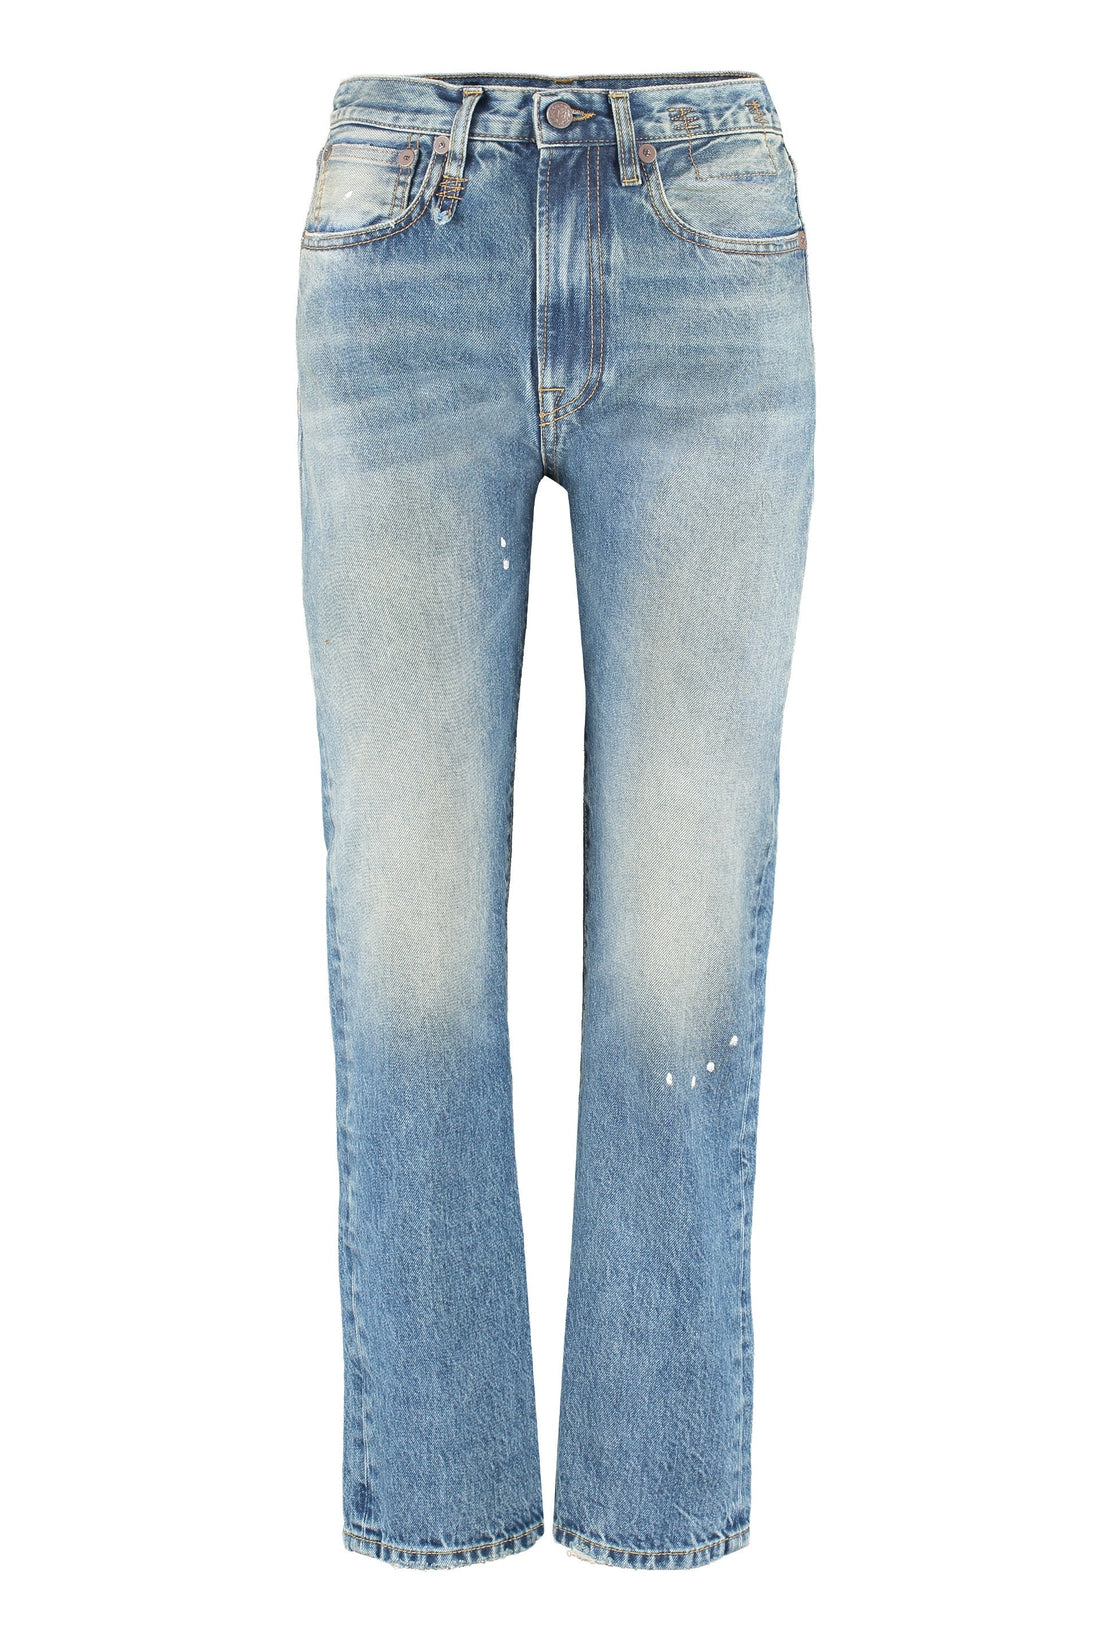 R13-OUTLET-SALE-Courtney 5-pocket jeans-ARCHIVIST